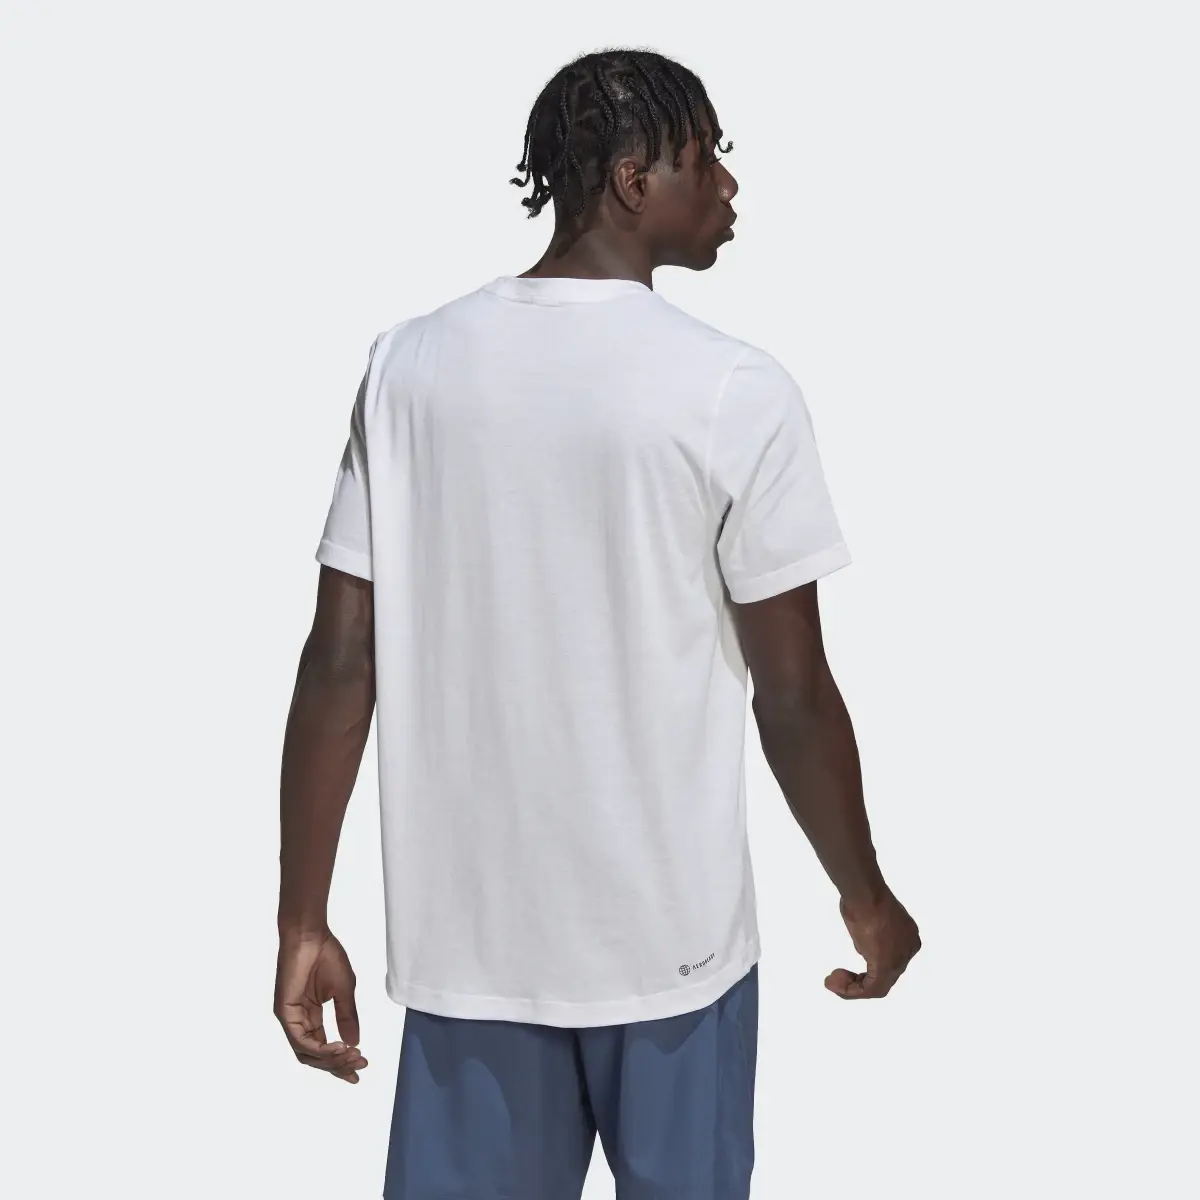 Adidas T-shirt Designed to Move. 3